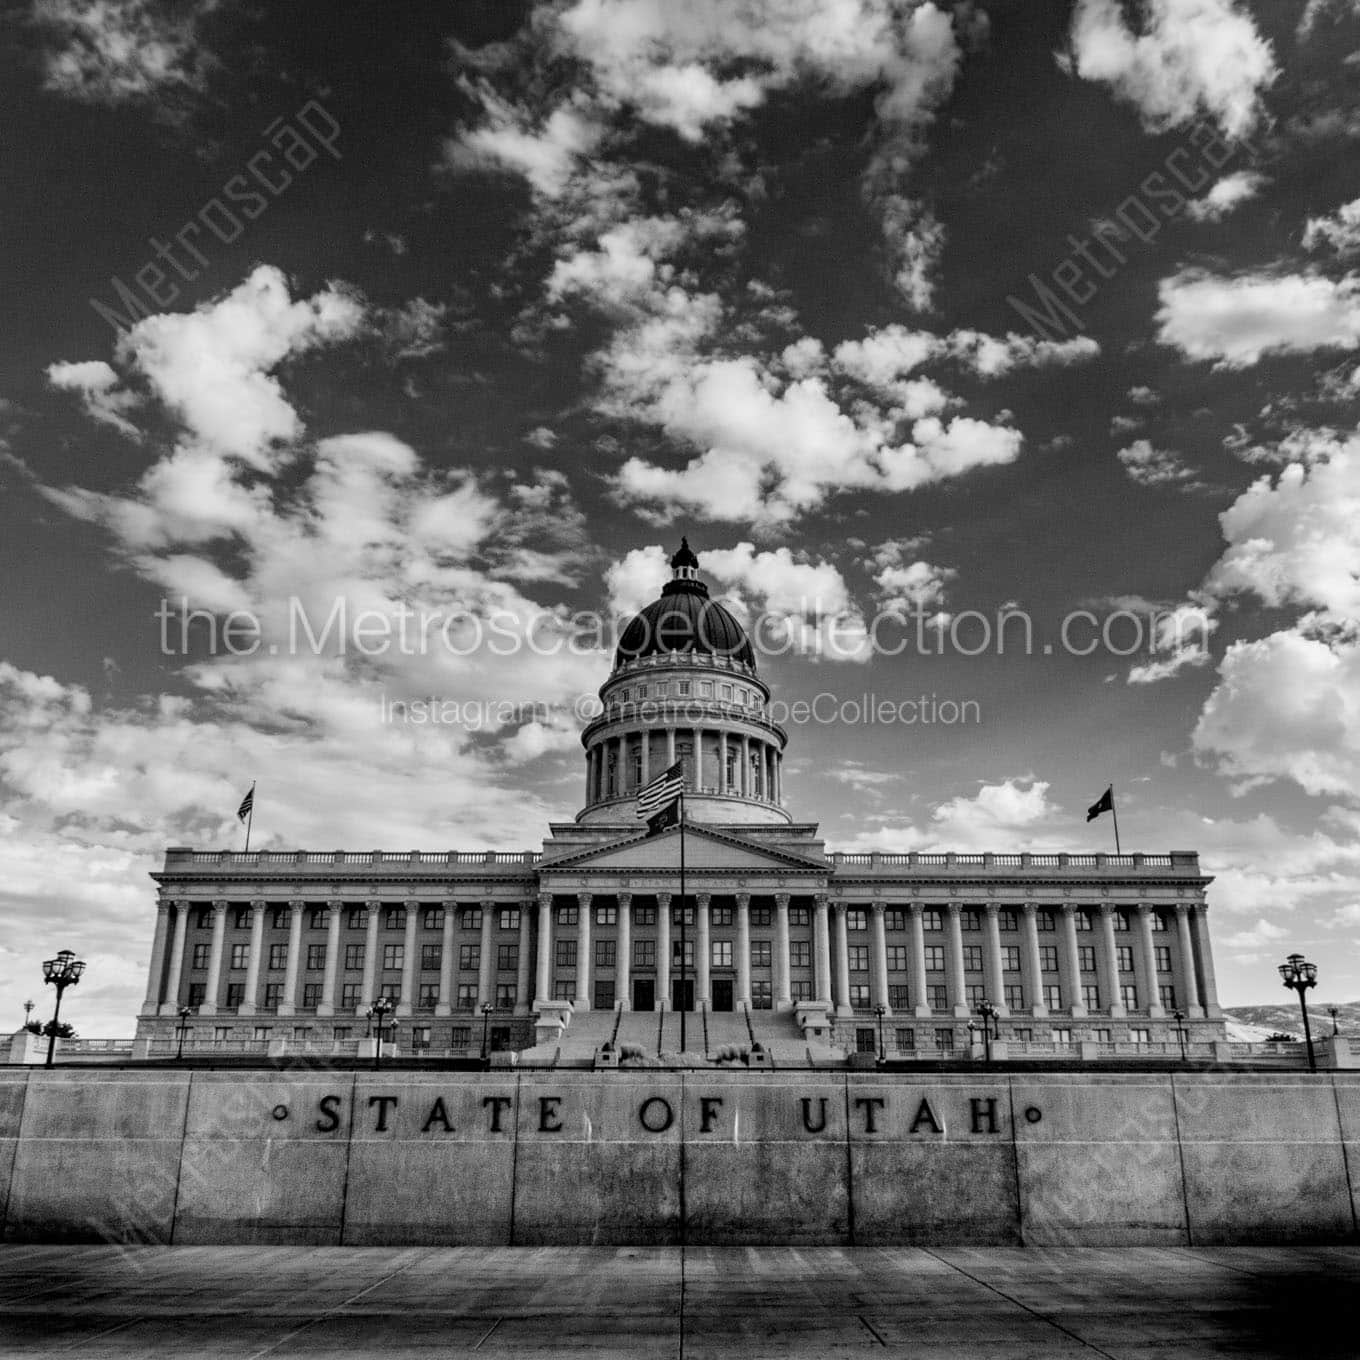 utah state capitol building Black & White Office Art